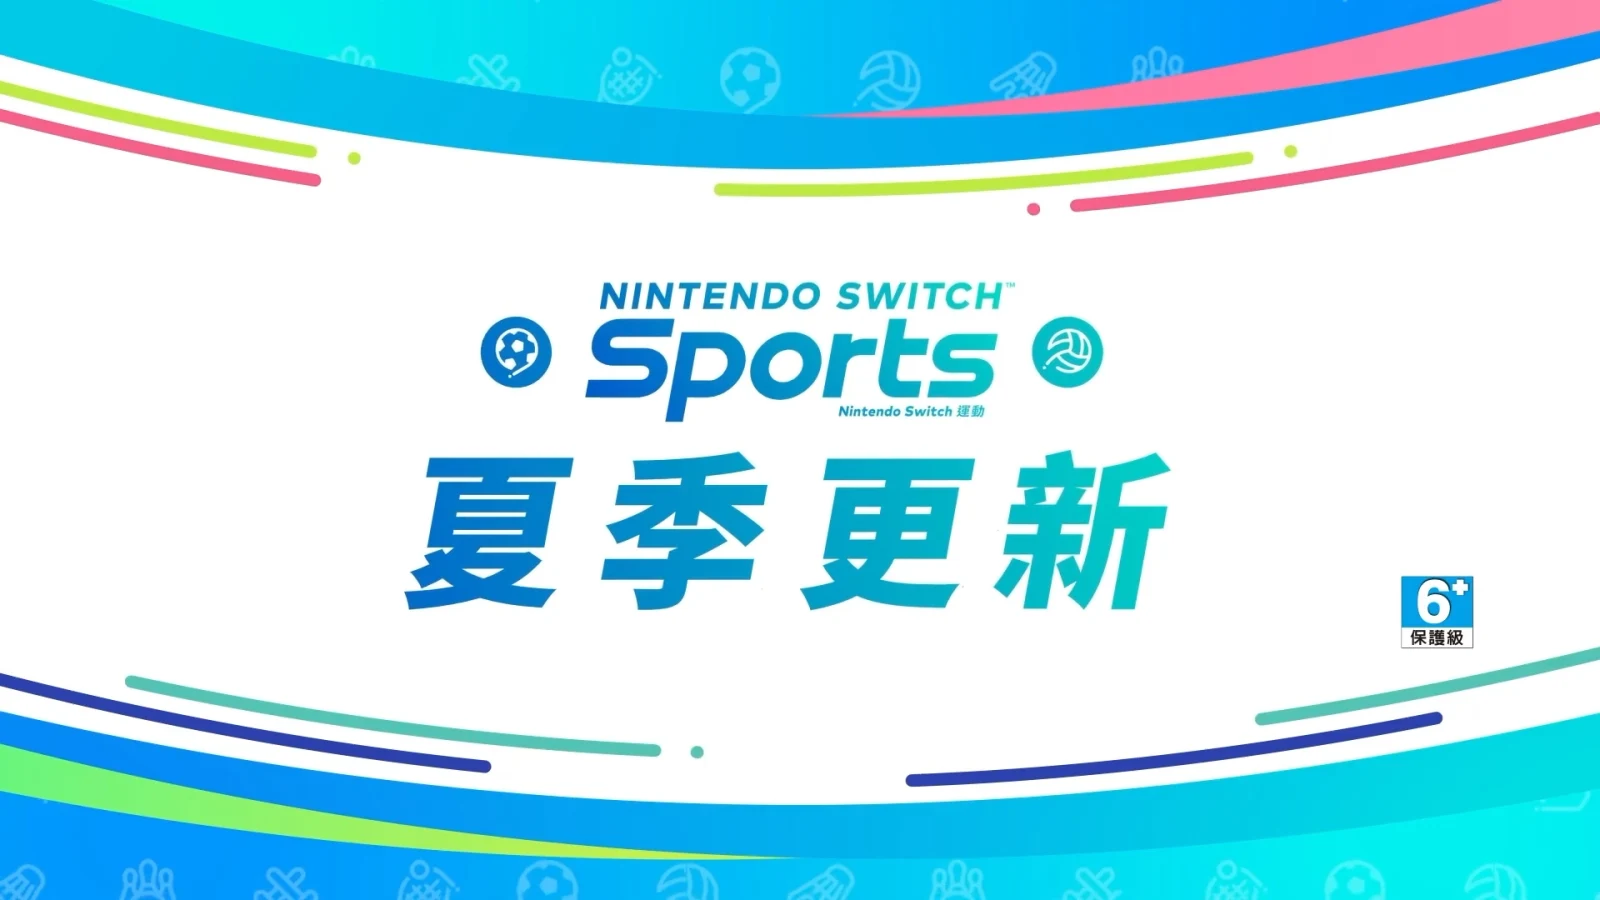 《Nintendo Switch Sports》夏季更新预告放出，今日正式上线